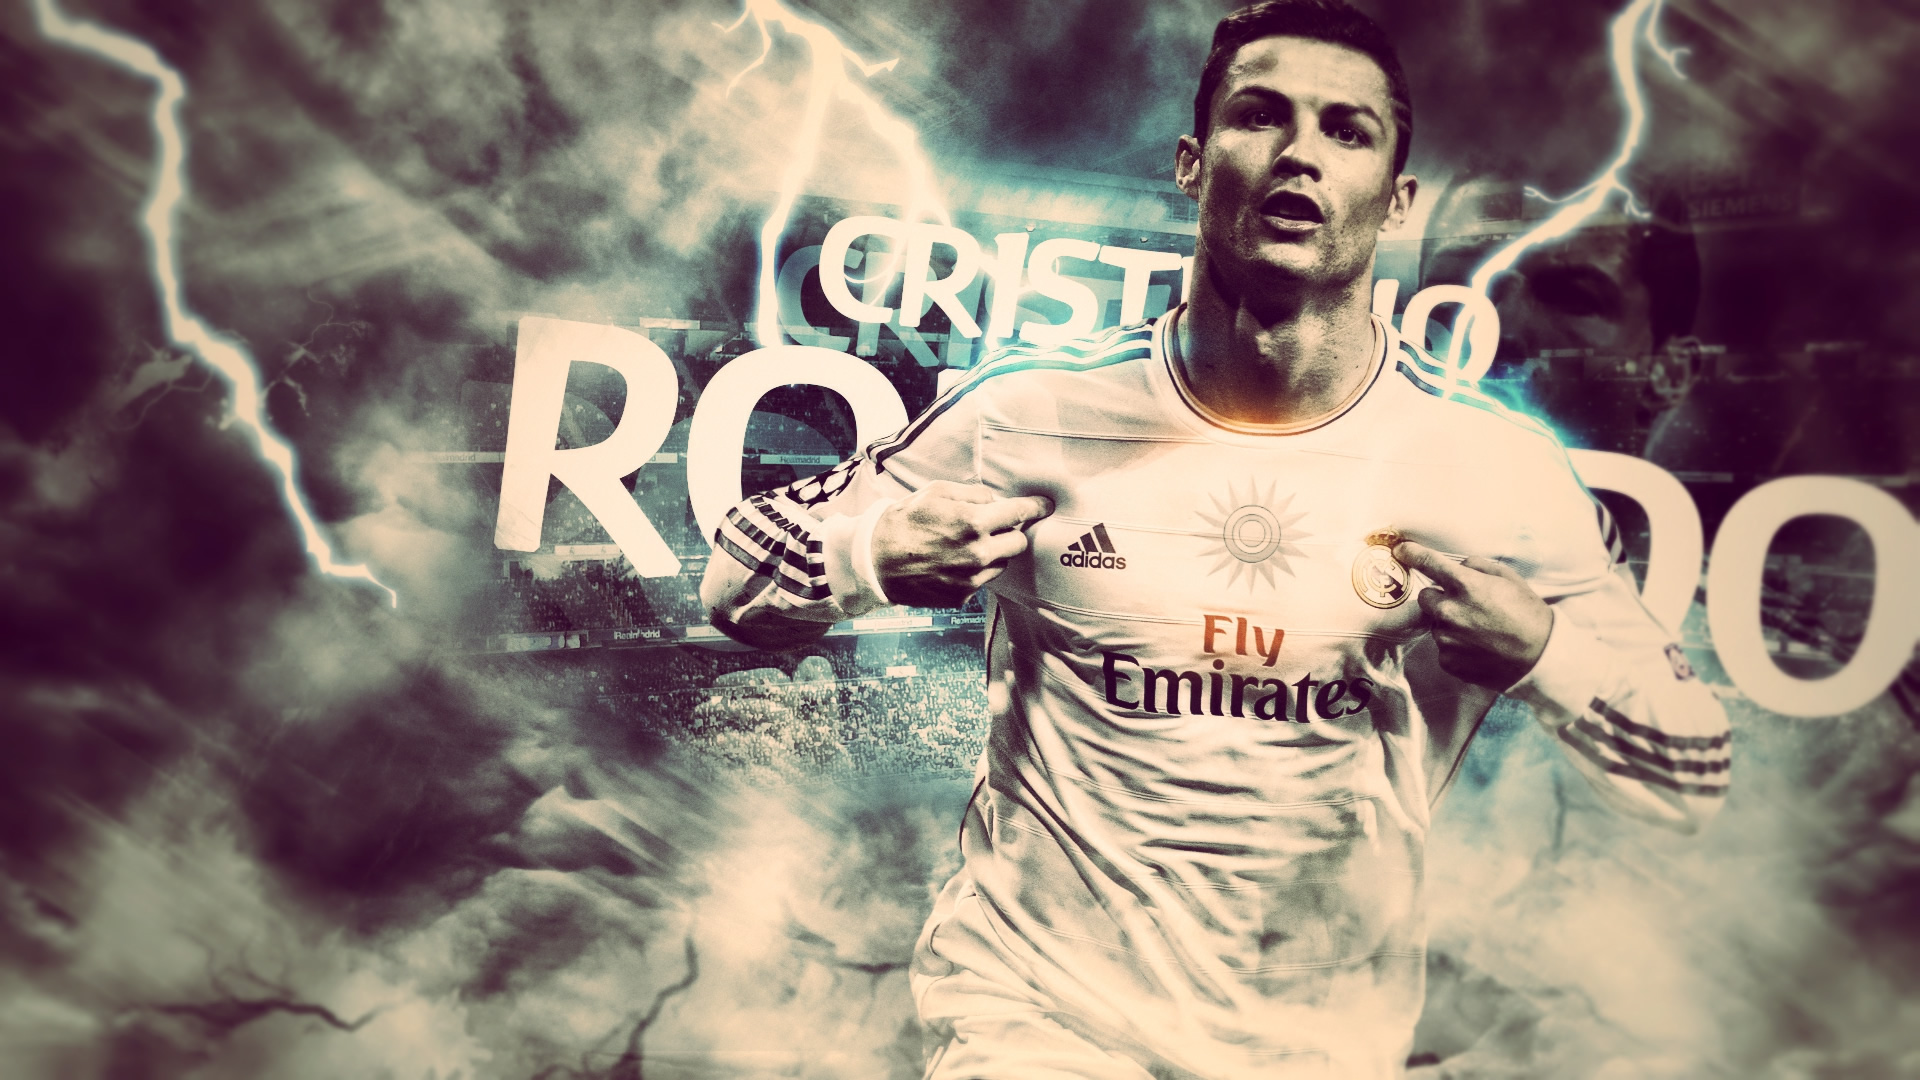 Cristiano-Ronaldo-Wallpaper-Backgrounds-17.jpg